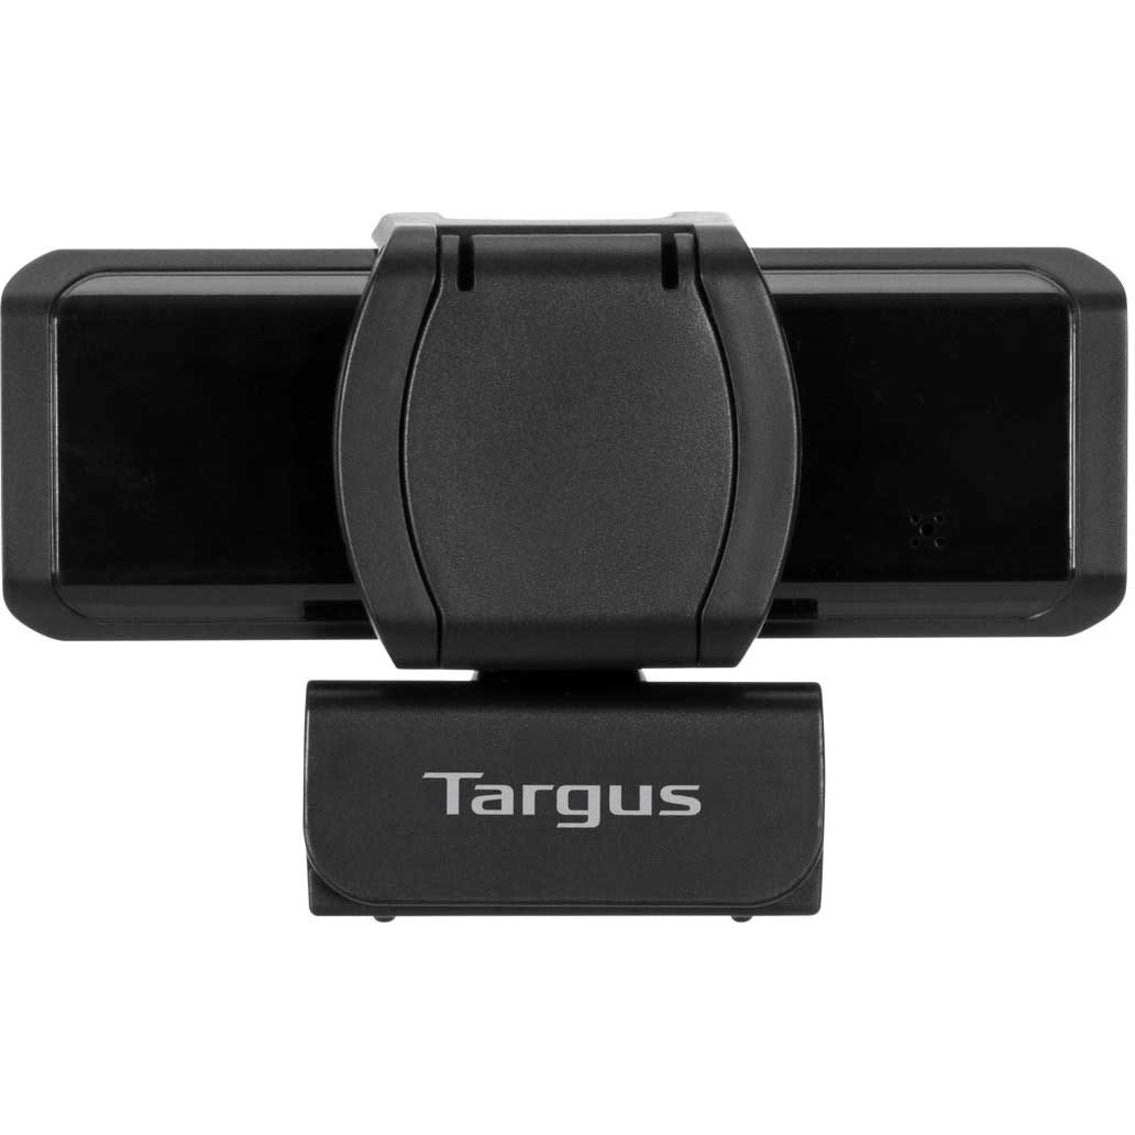 Targus AVC041GL Webcam Pro - Full HD 1080p Webcam with Flip Privacy Cover, 30 fps, Black, USB Type A